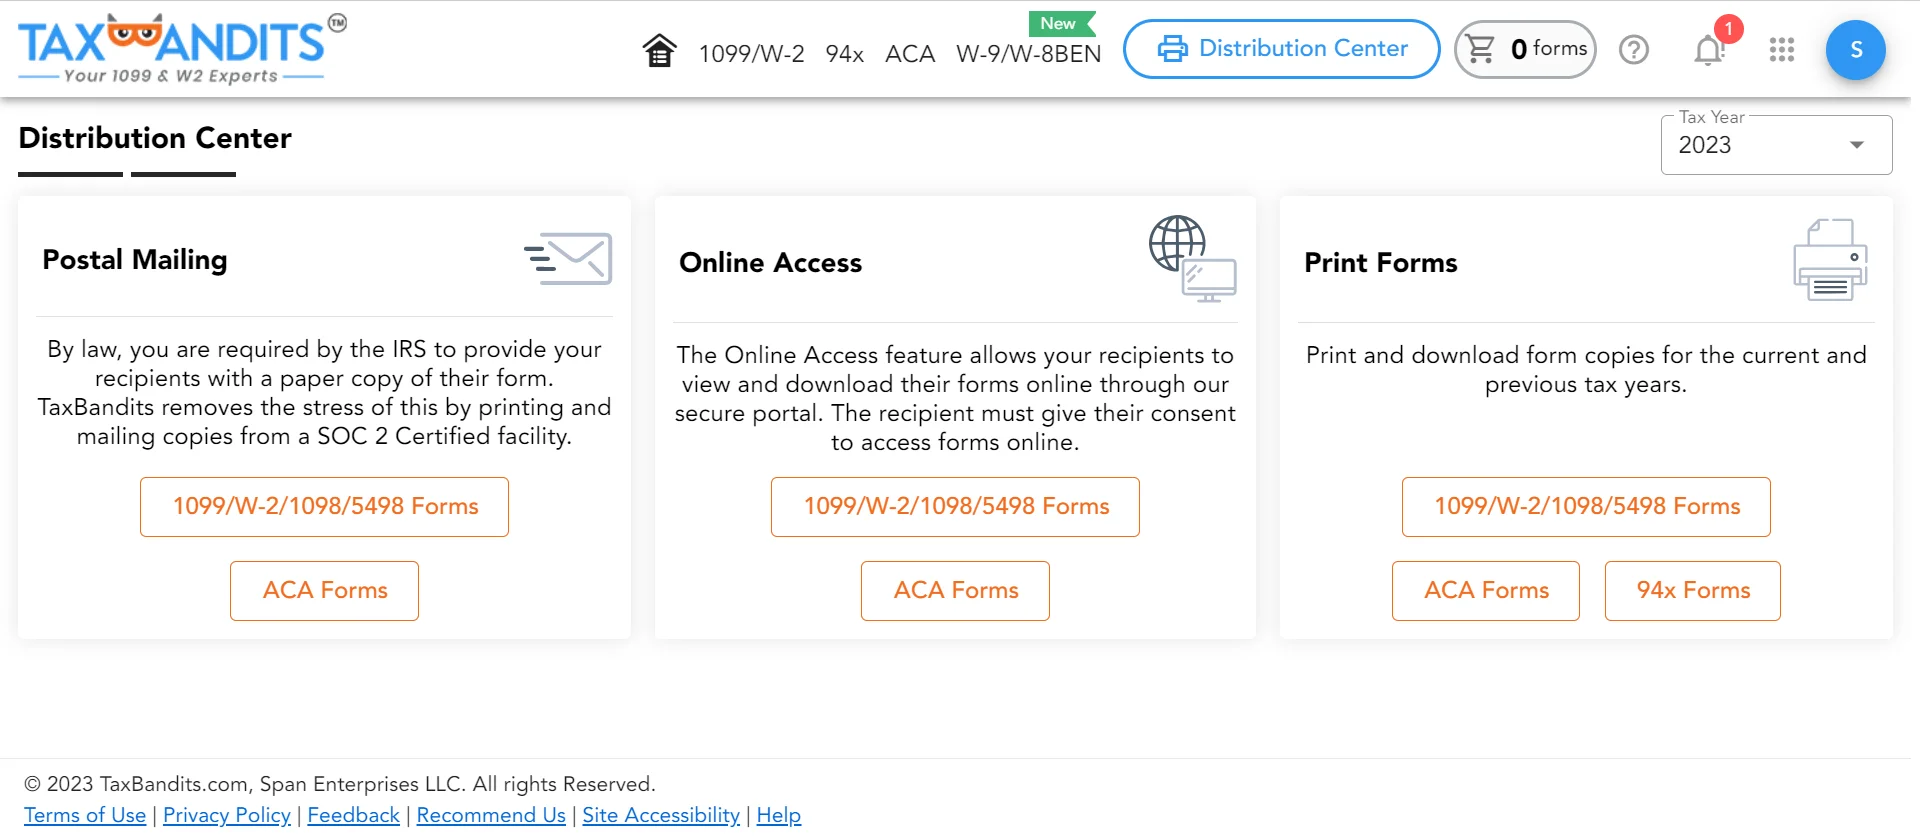 Deliver Recipient Copy (Online/Postal)